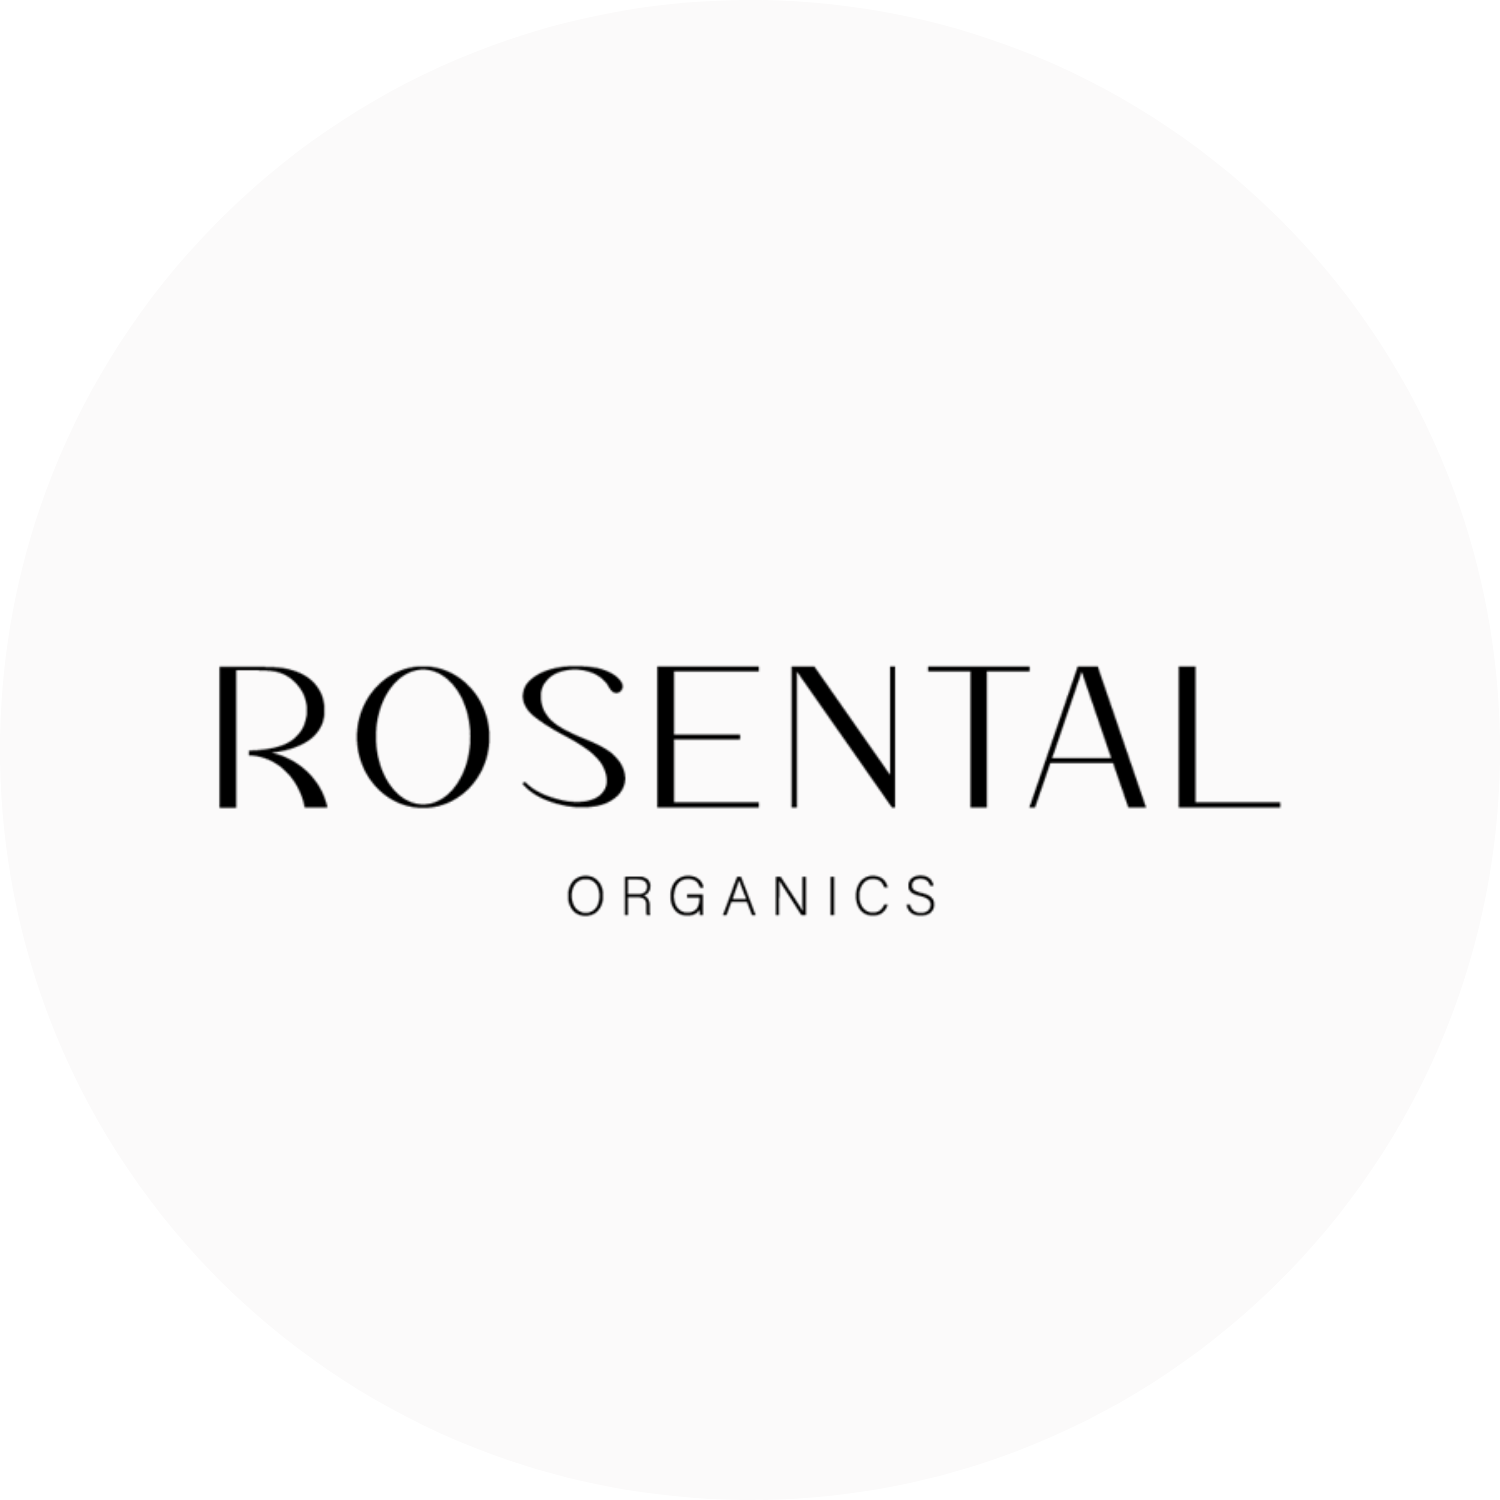 Rosental Organics